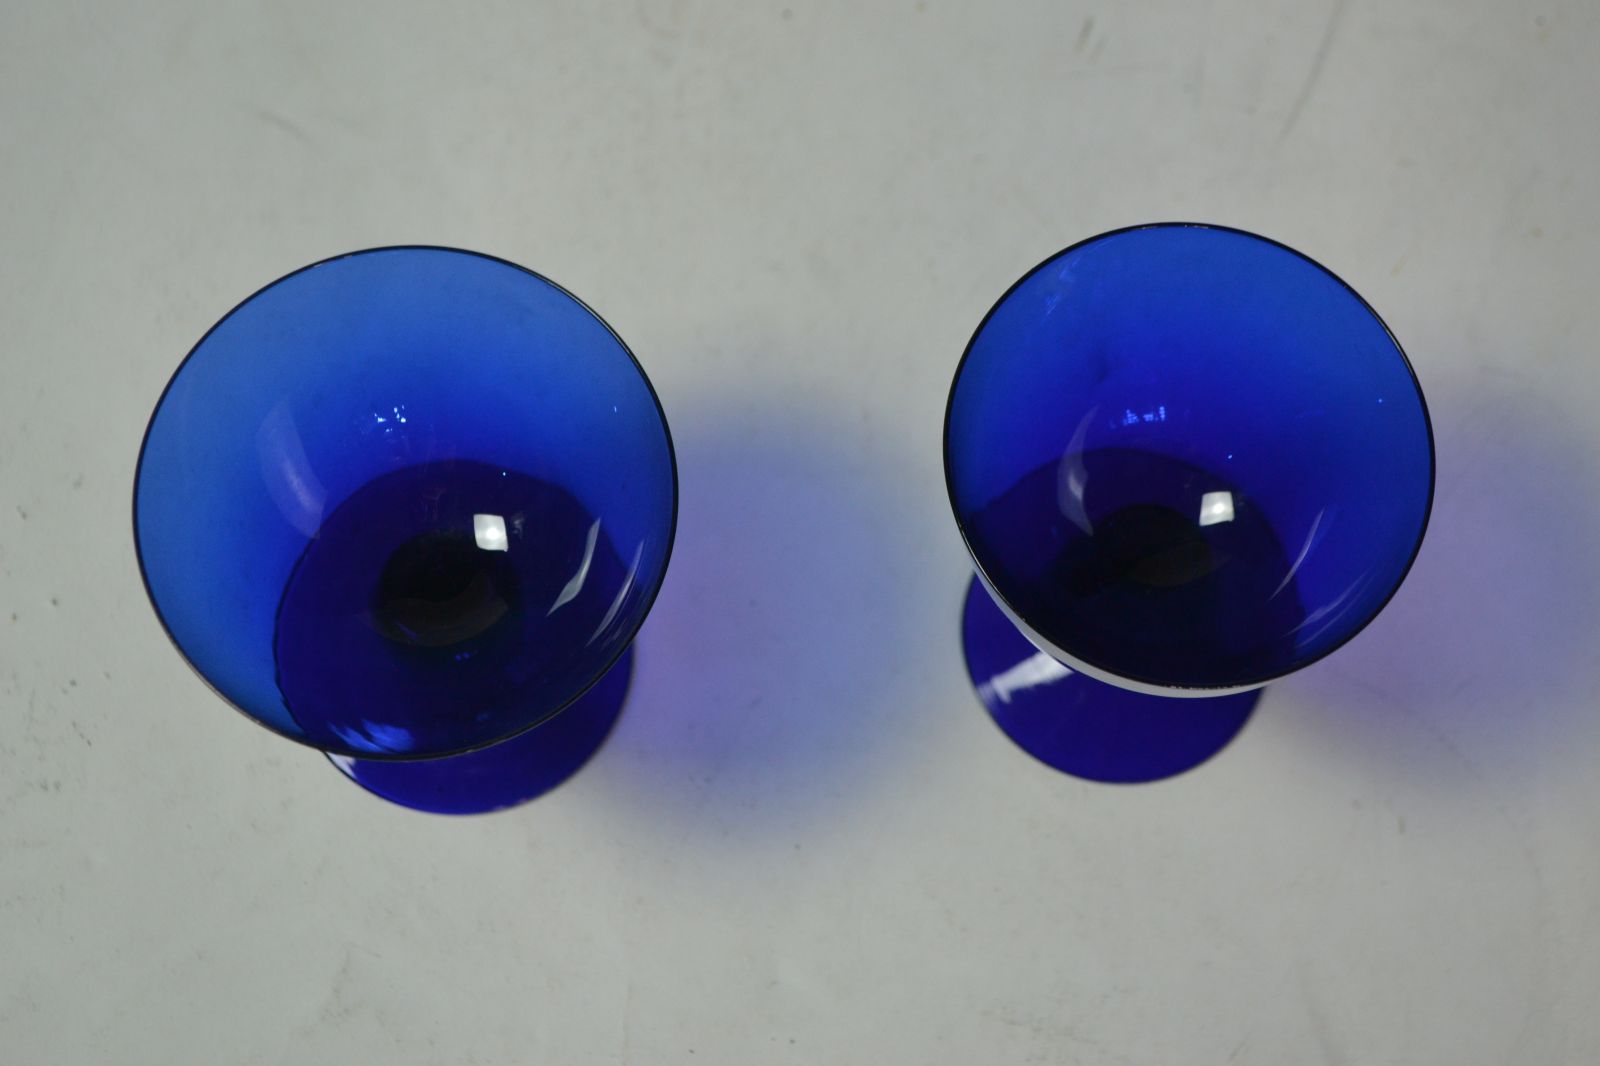 Pair of 19th Century Bristol Blue Drinking Glasses.